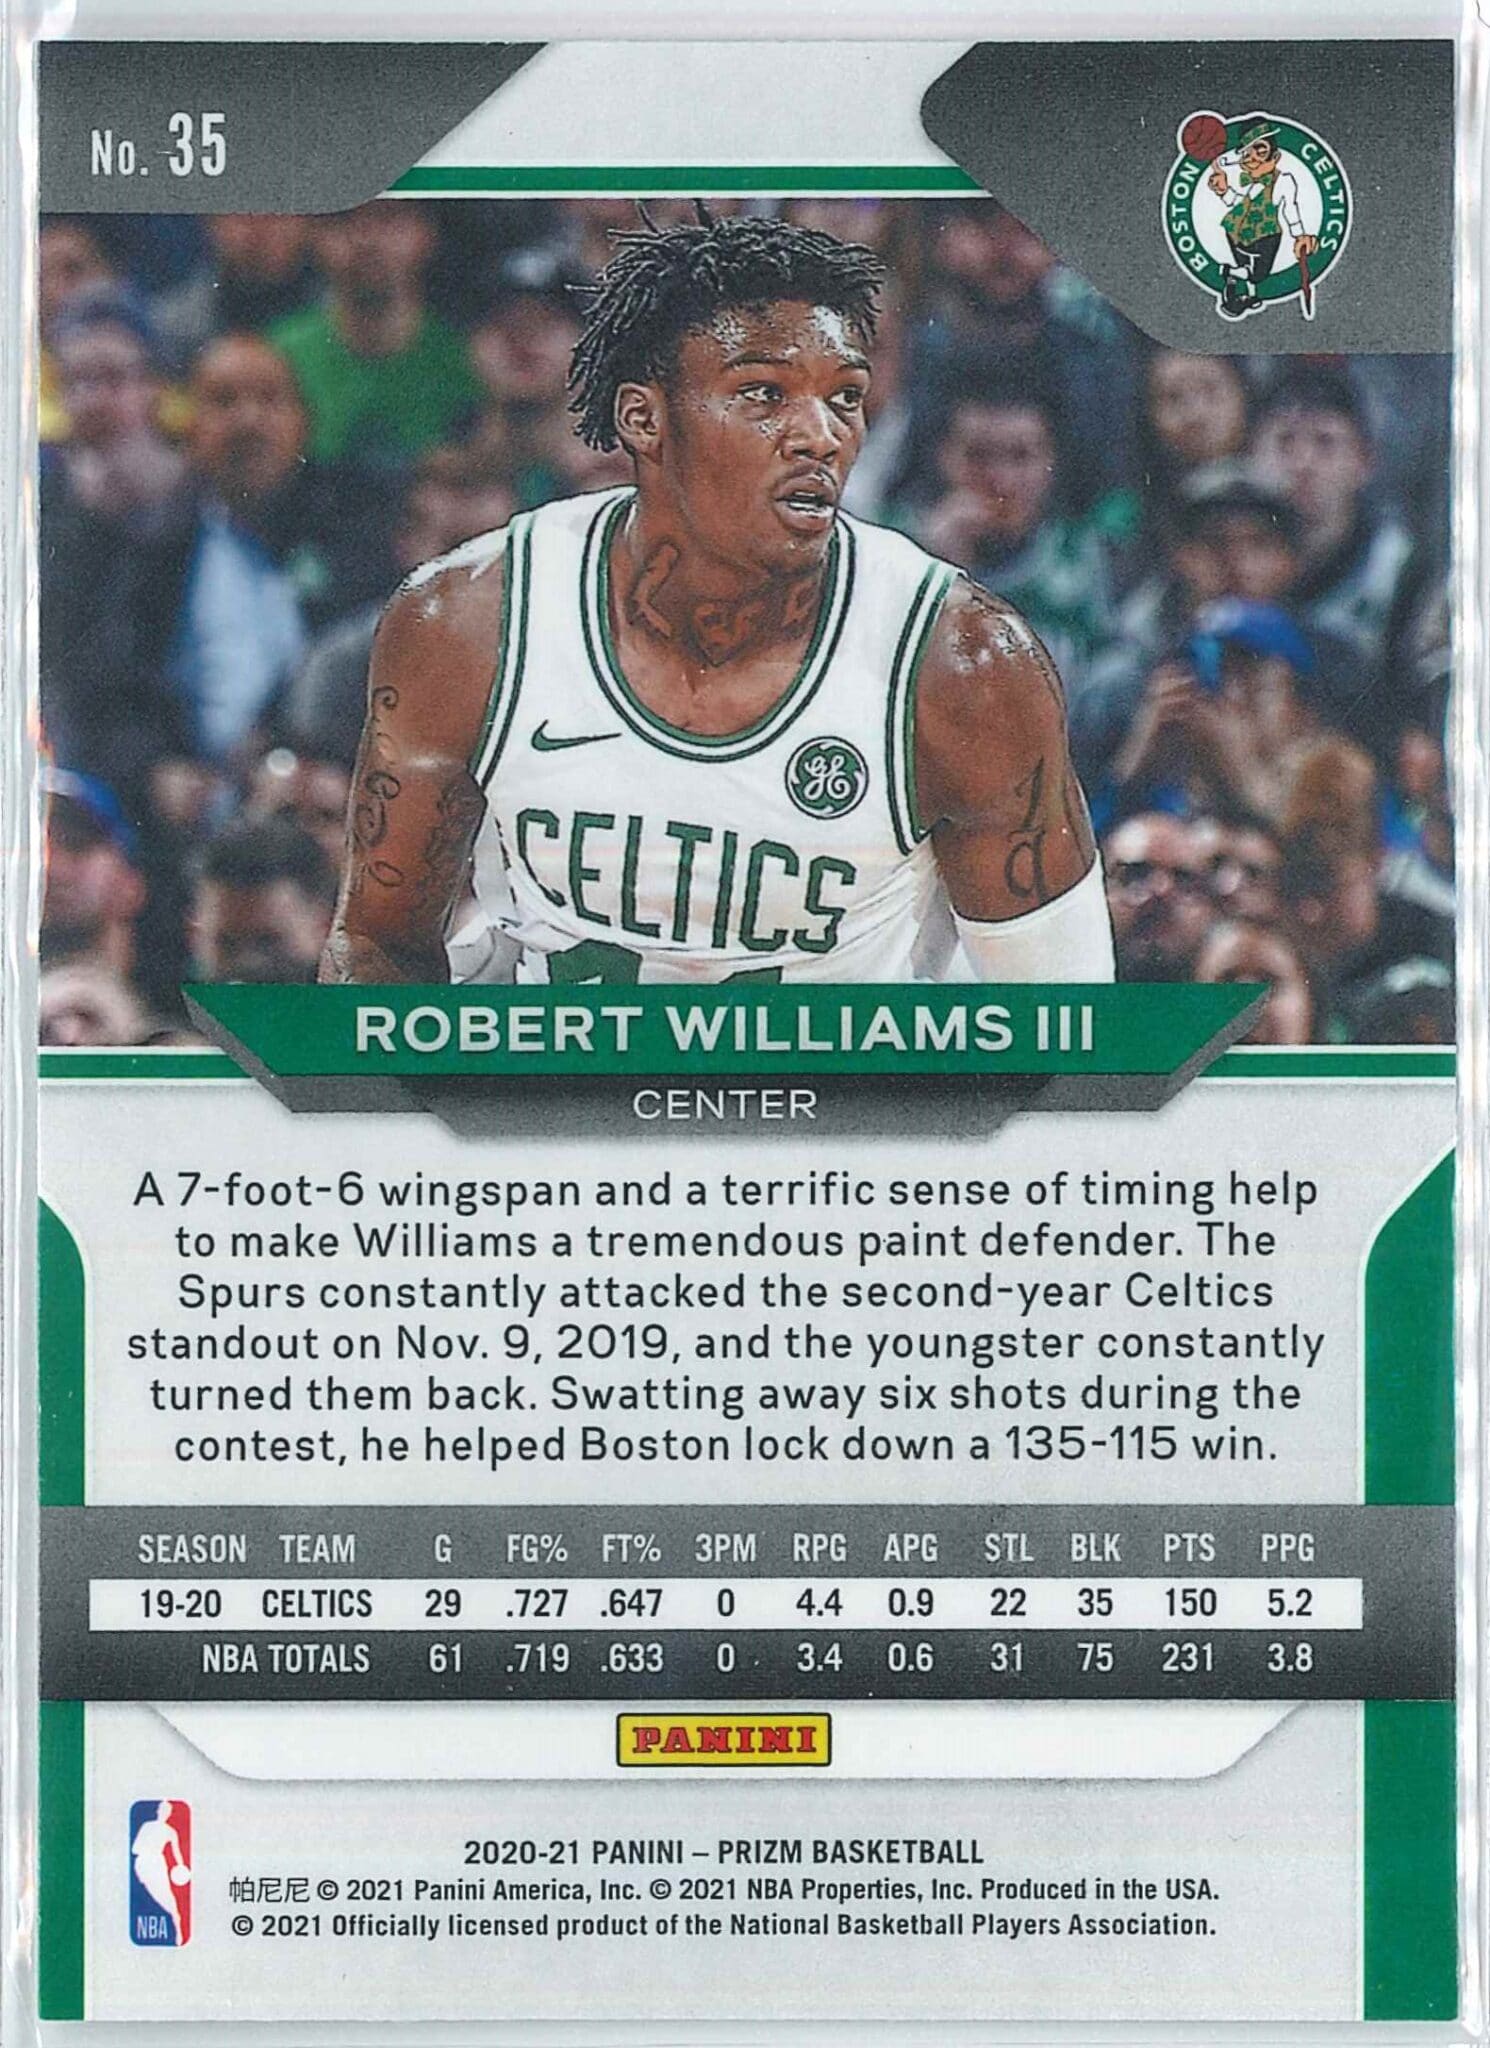 Robert Williams III All Basketball Cards - radiozona.com.ar